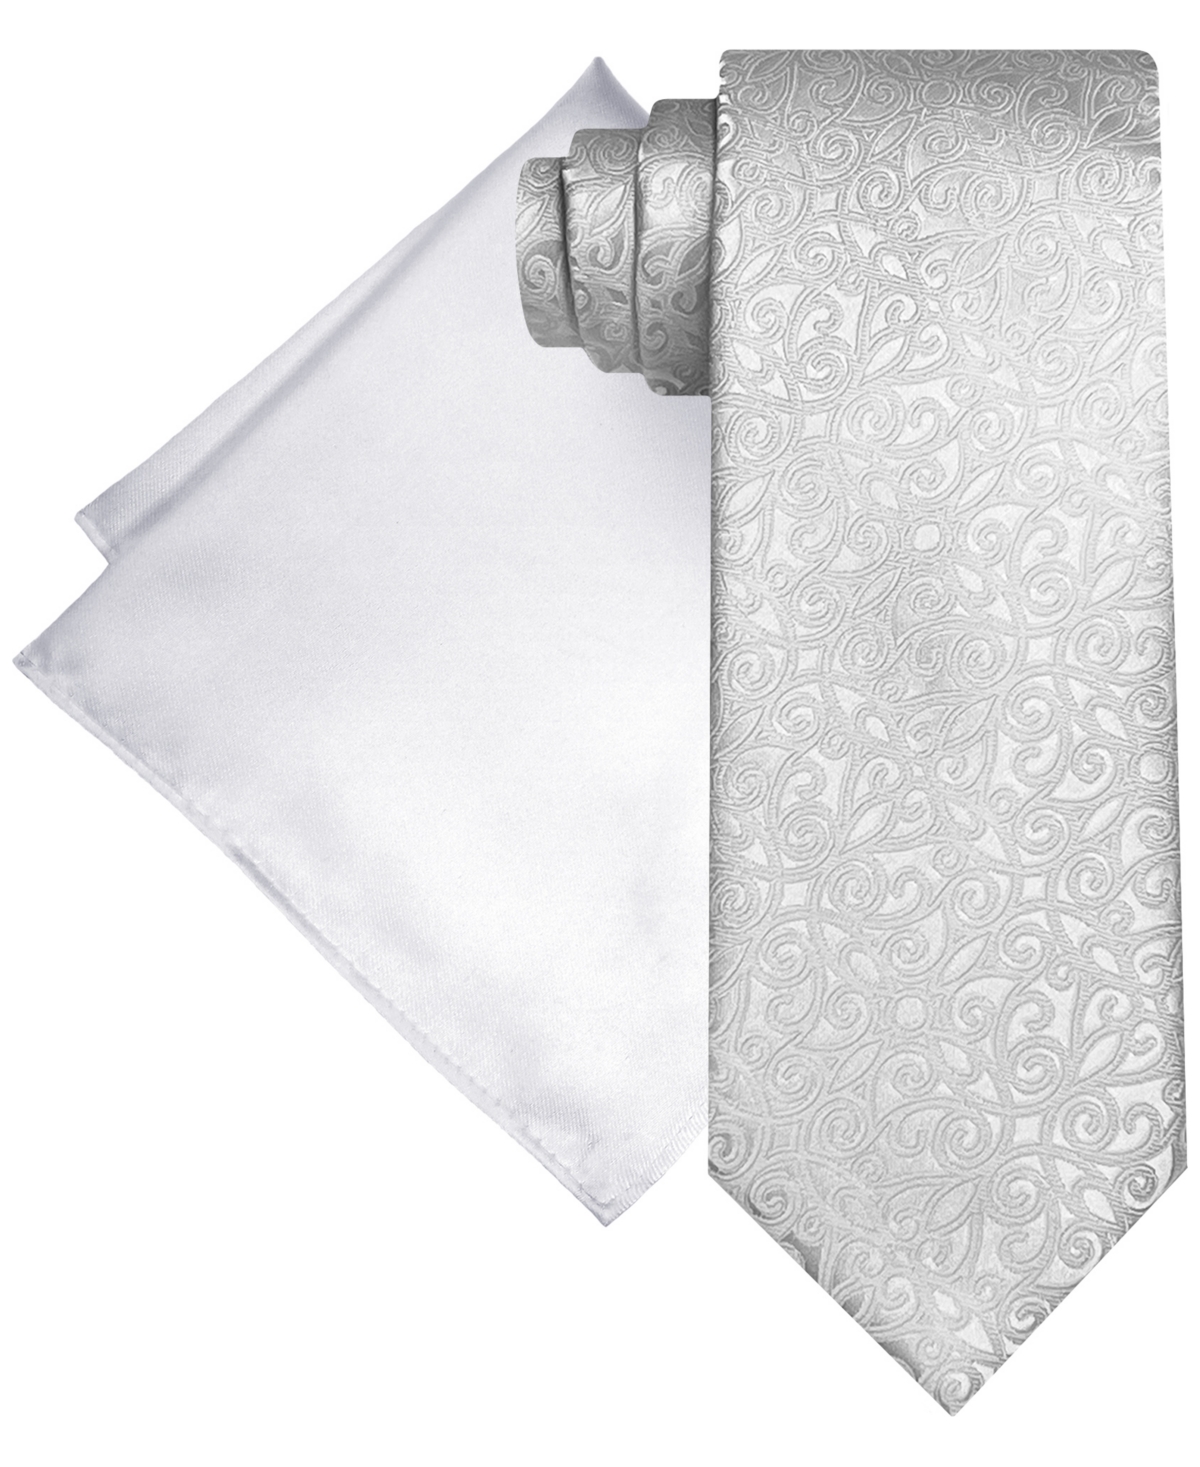 Men's Ornate Textured Tie & Solid Pocket Square Set - White